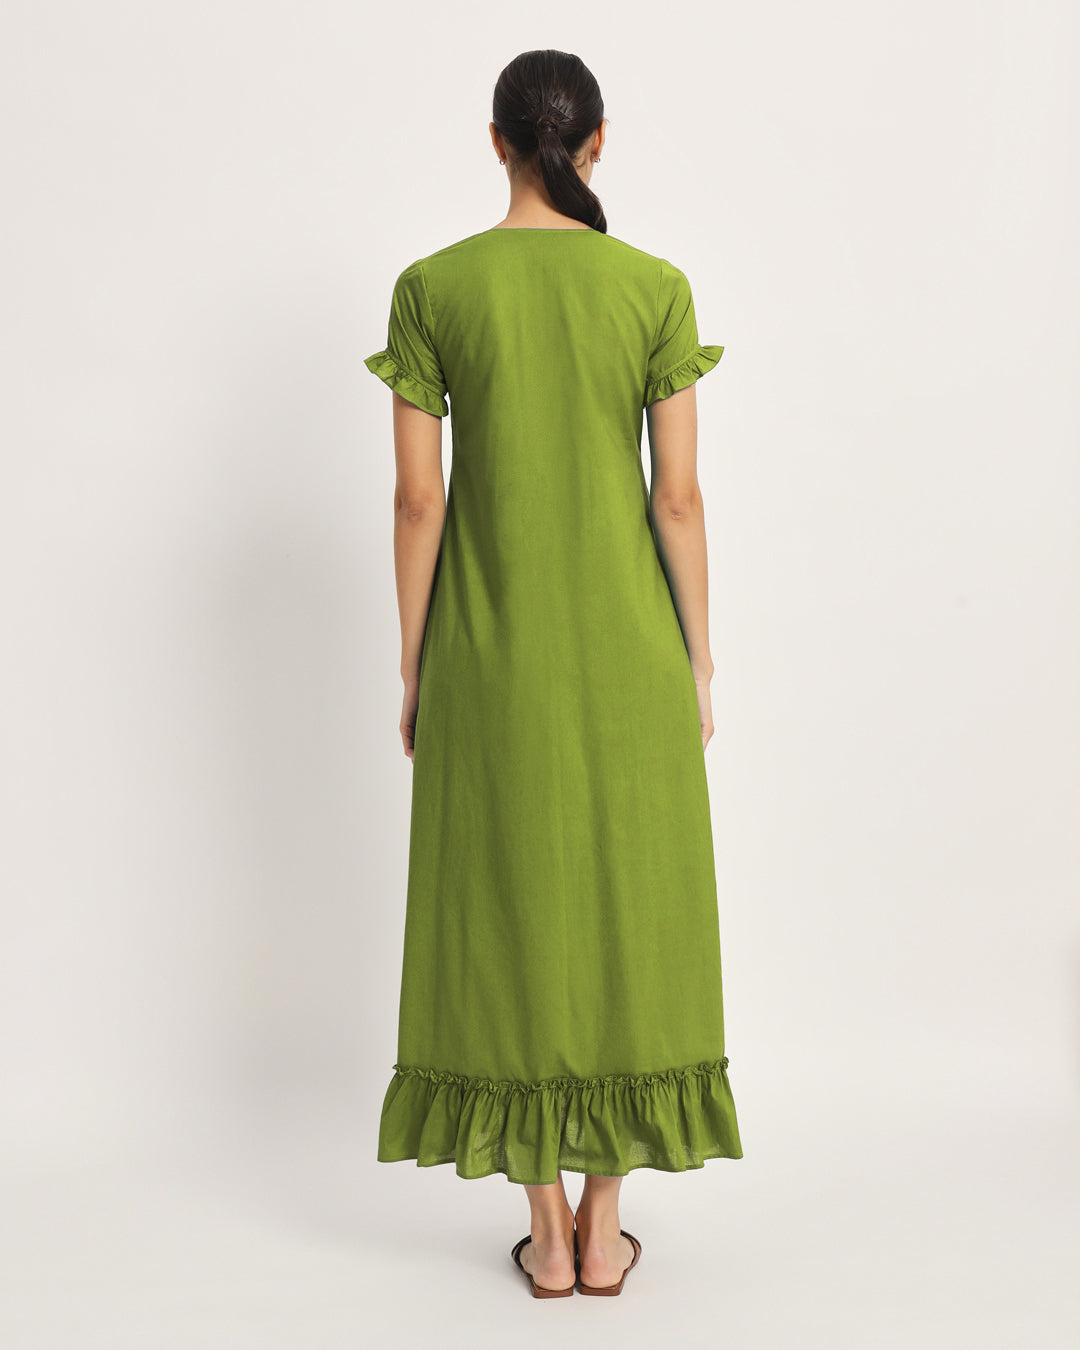 Combo: Iced Grey & Sage Green Bumpin' & Stylin' Maternity & Nursing Dress - Set of 2